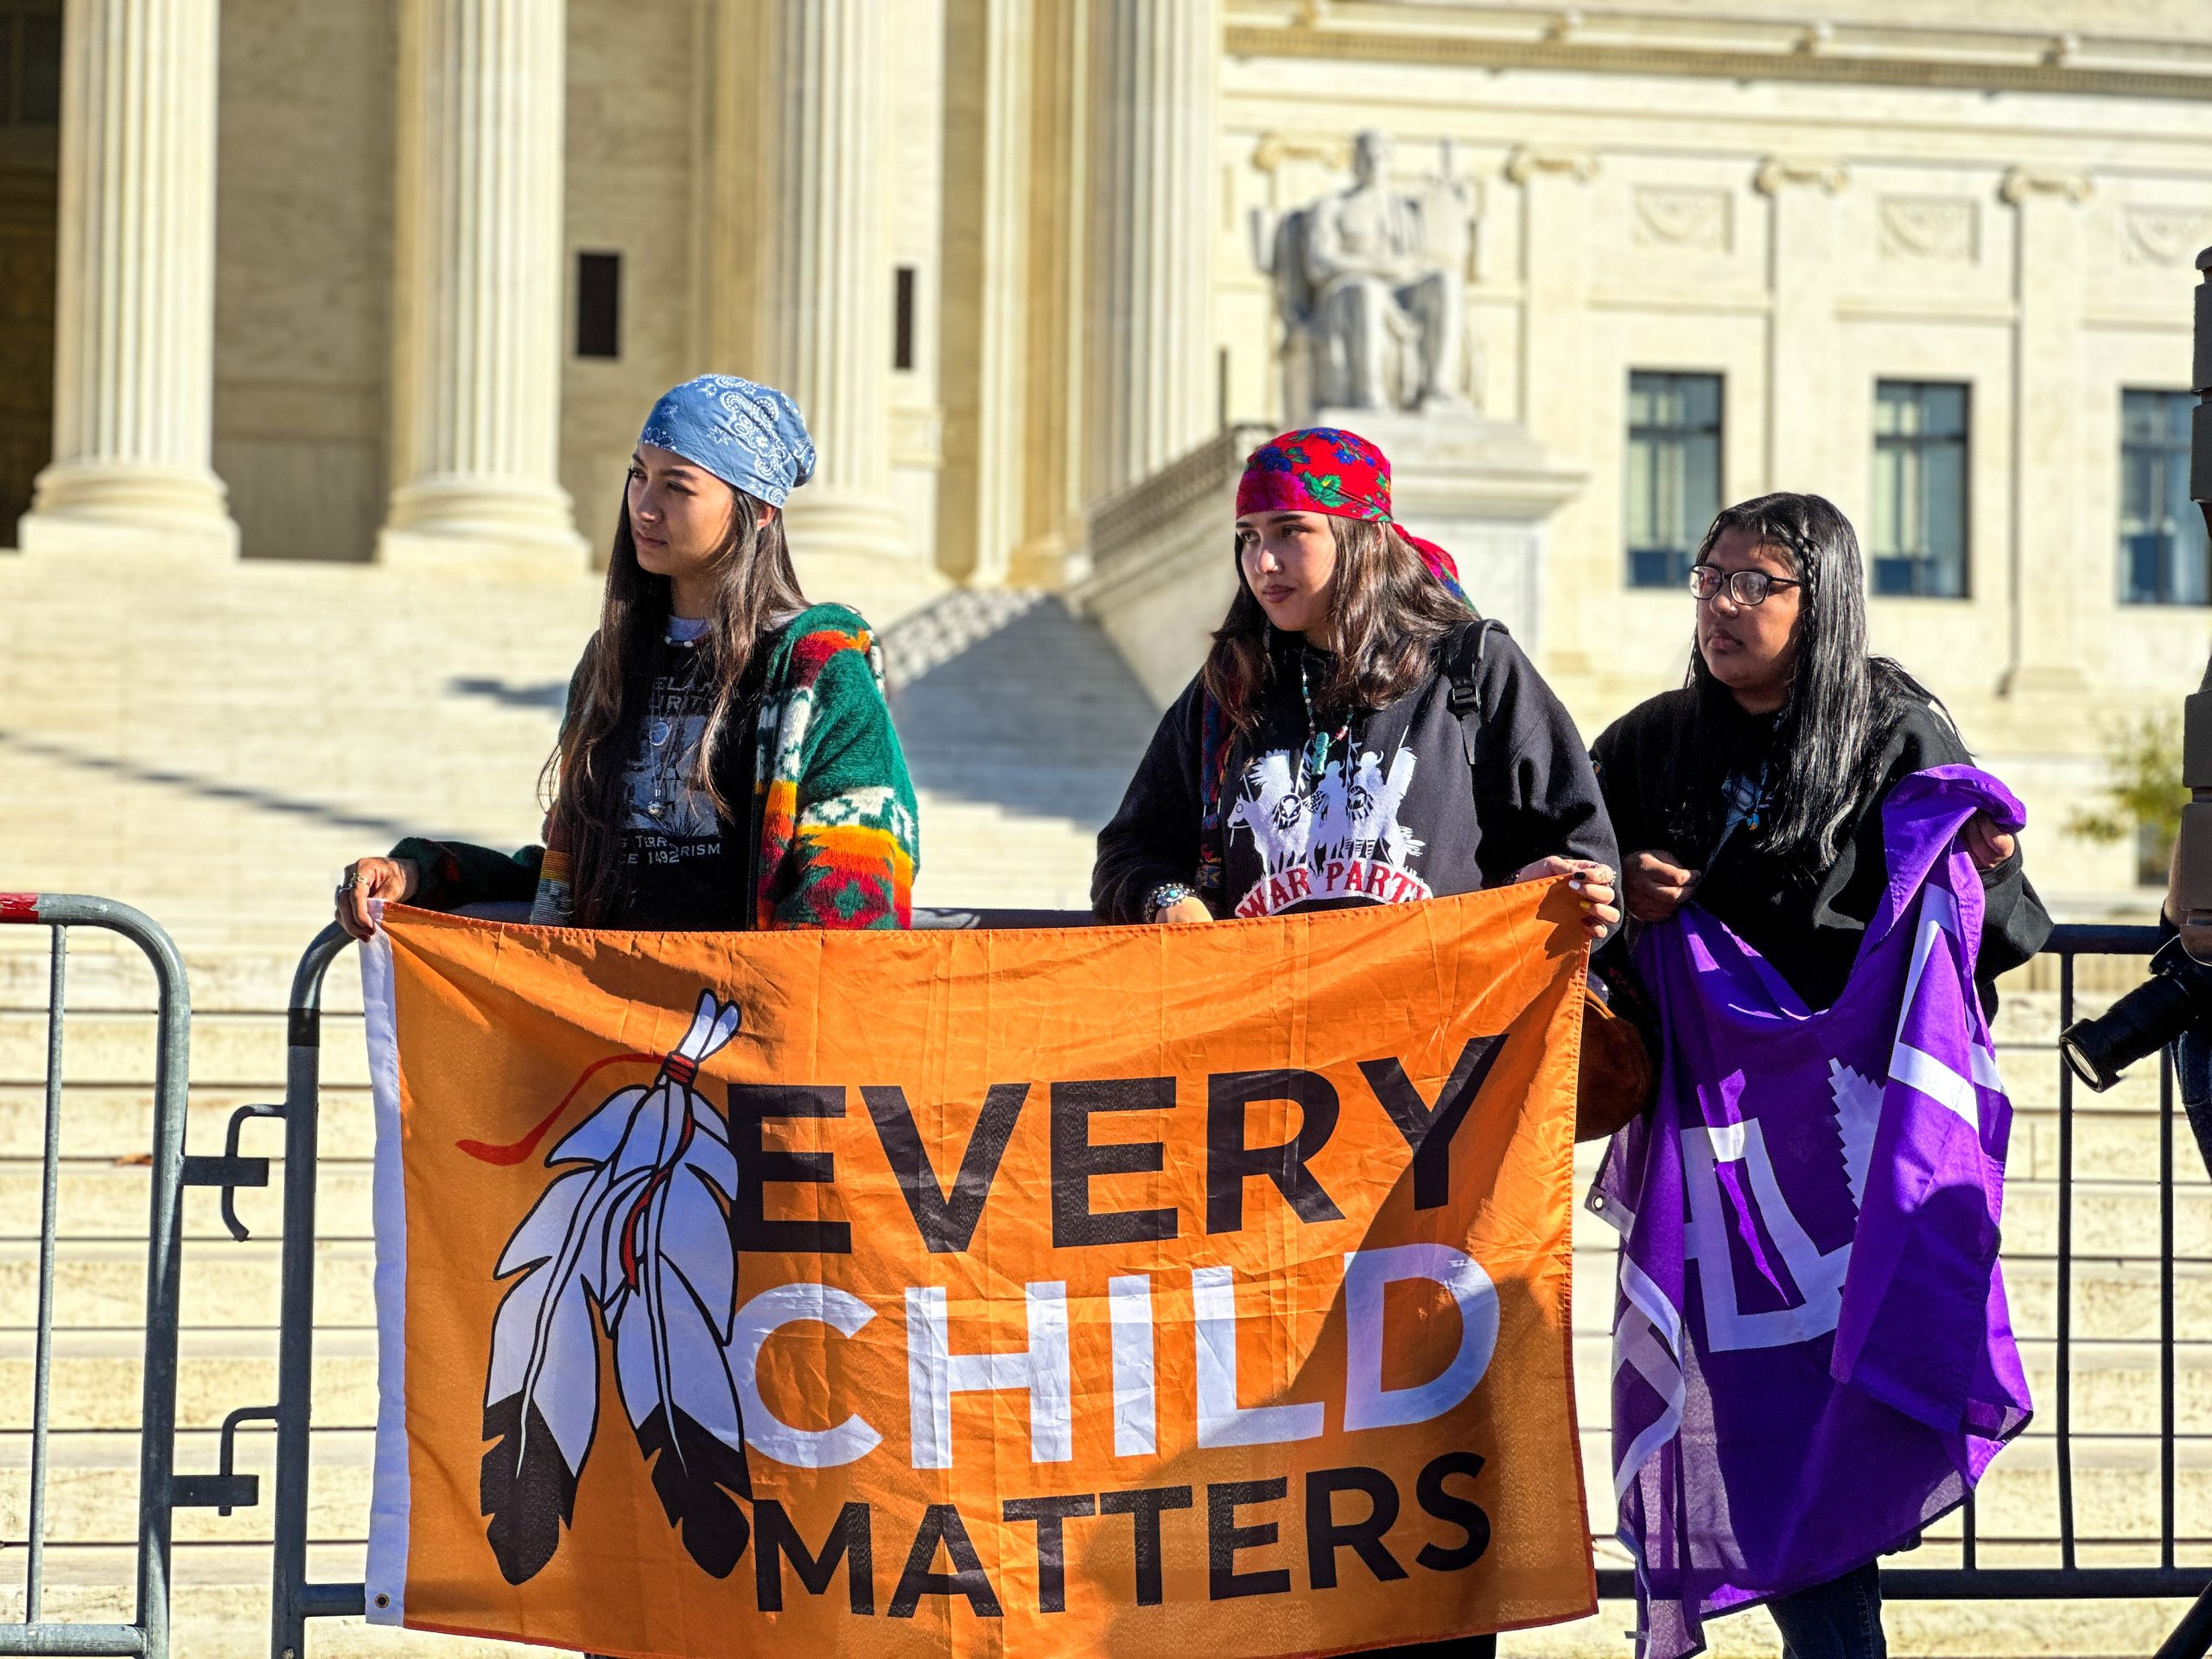 'Every Child Matters' at U.S. Supreme Court